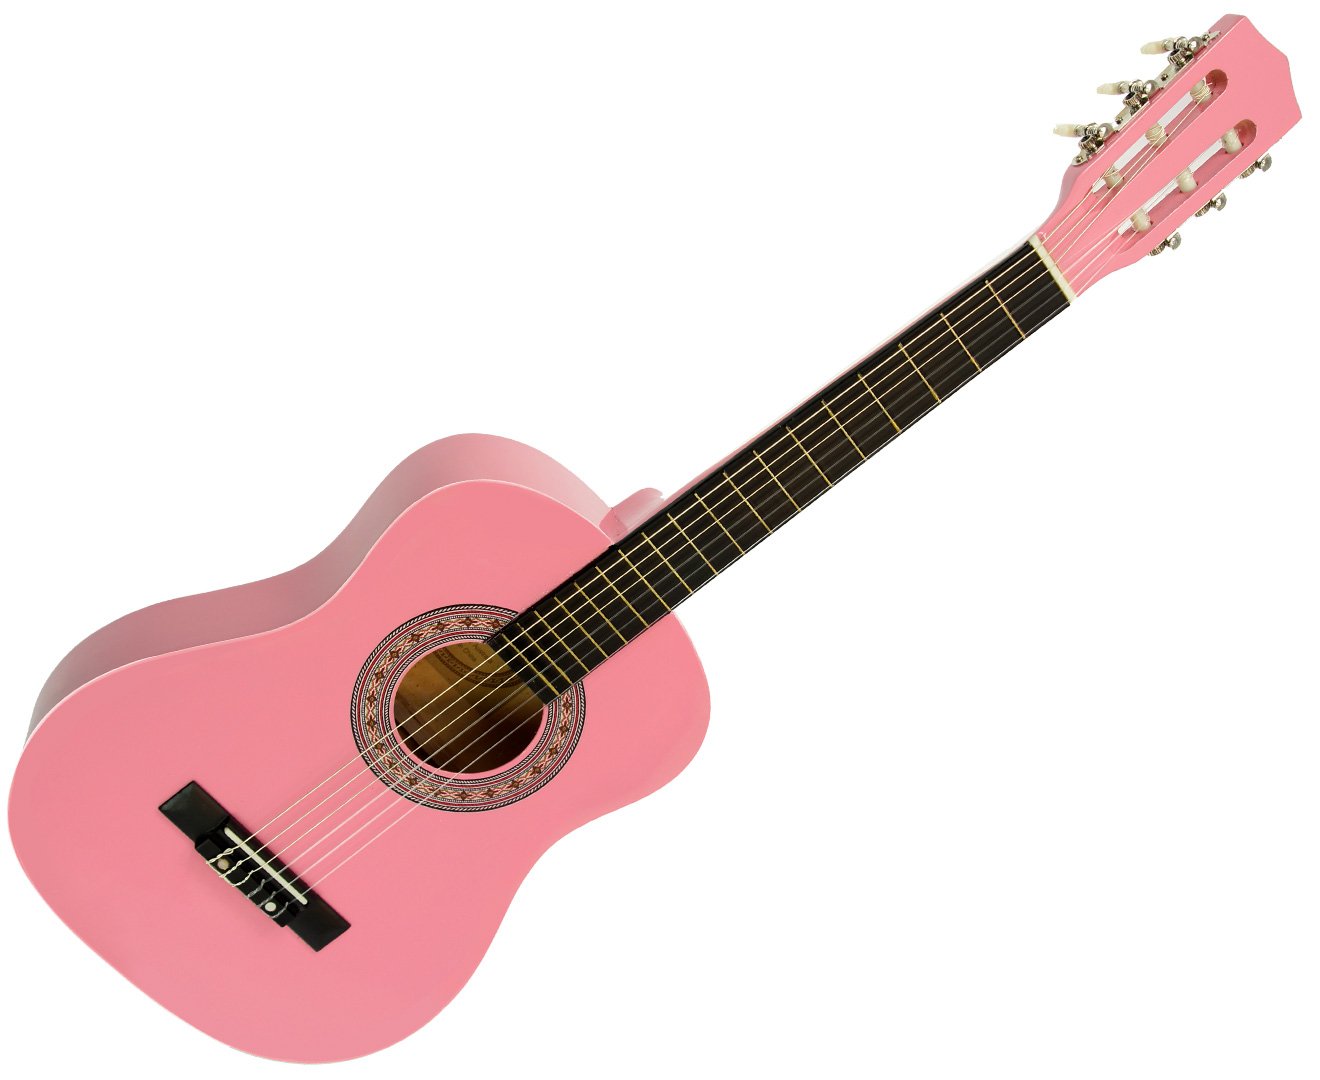 Childrens Guitar Karrera 34in Acoustic Wooden - Pink 1